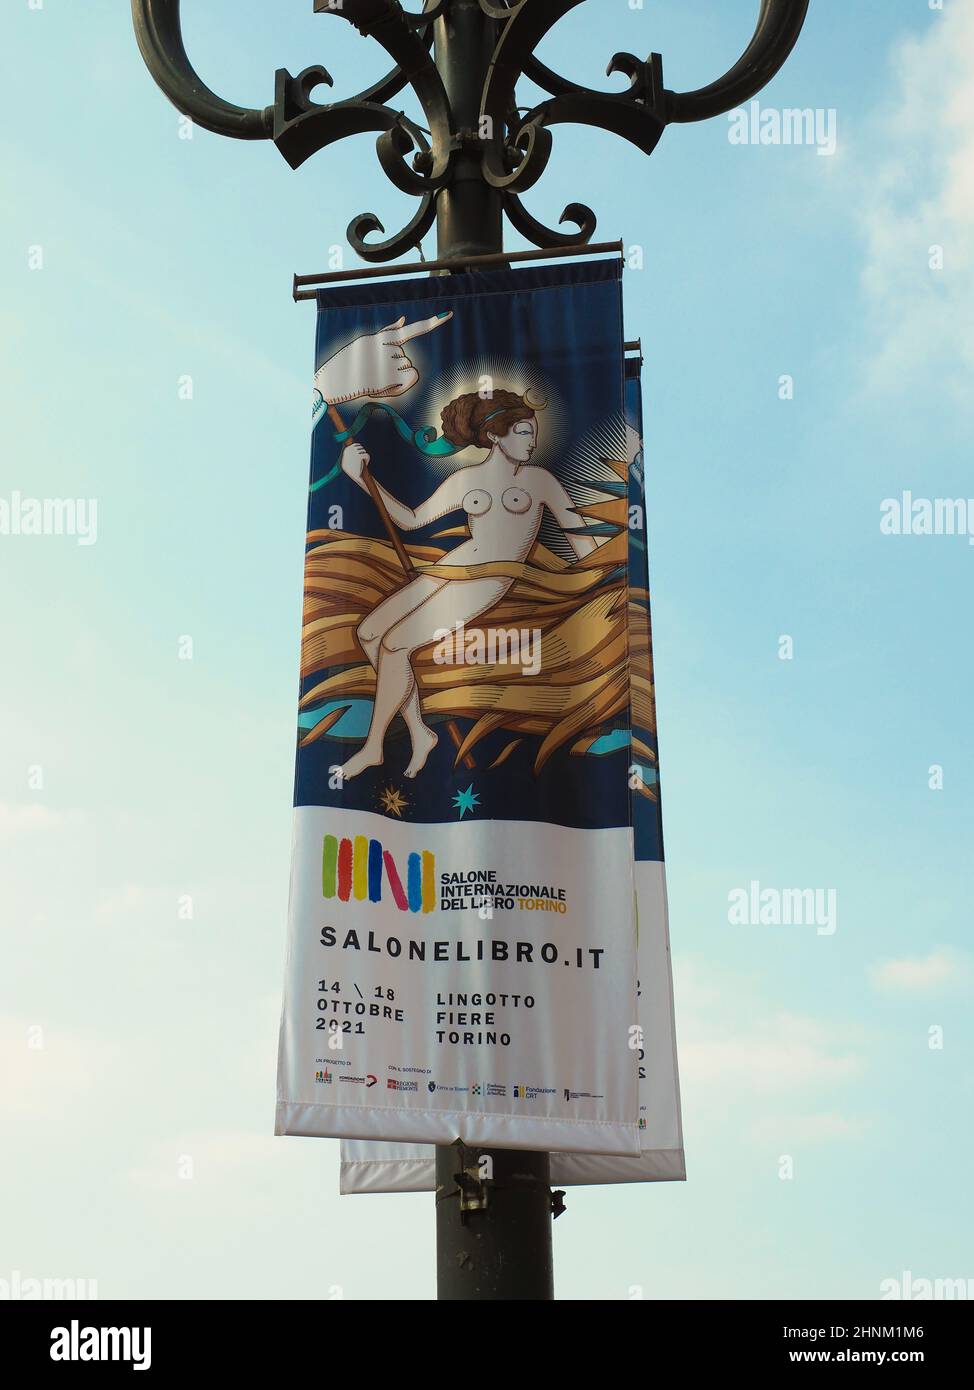 Salone Libro (translation Book fair) in Turin Stock Photo